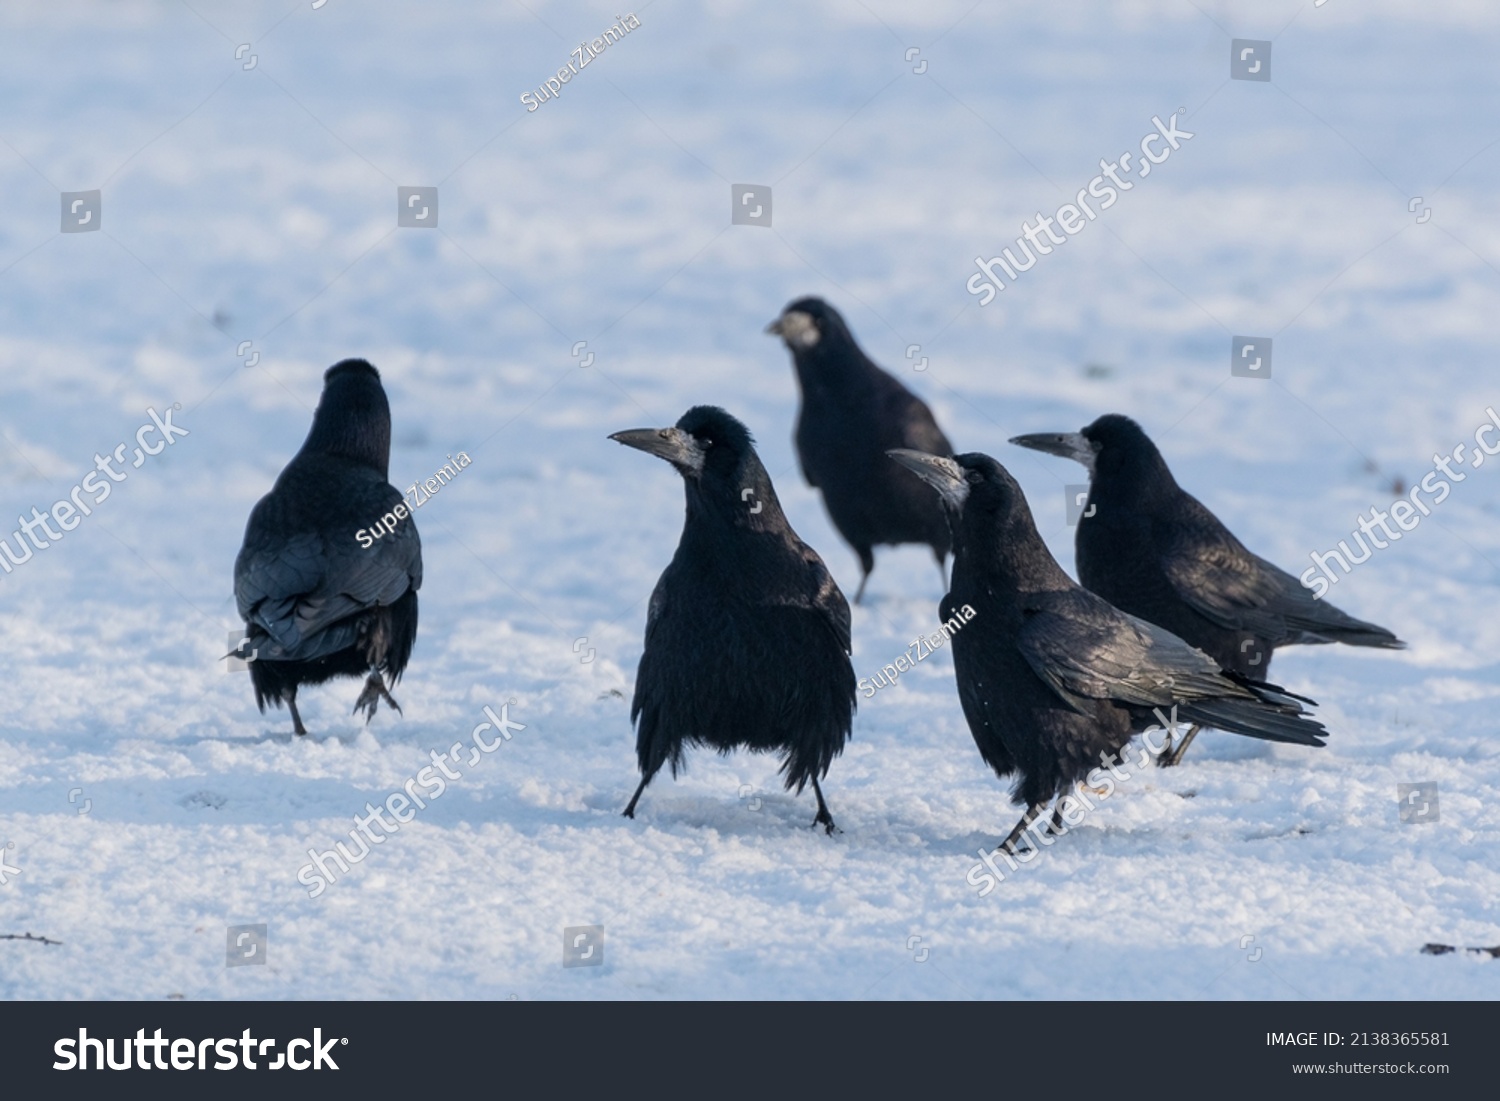 Five birds looking for food in the snow, Rook (Corvus frugilegus). #2138365581